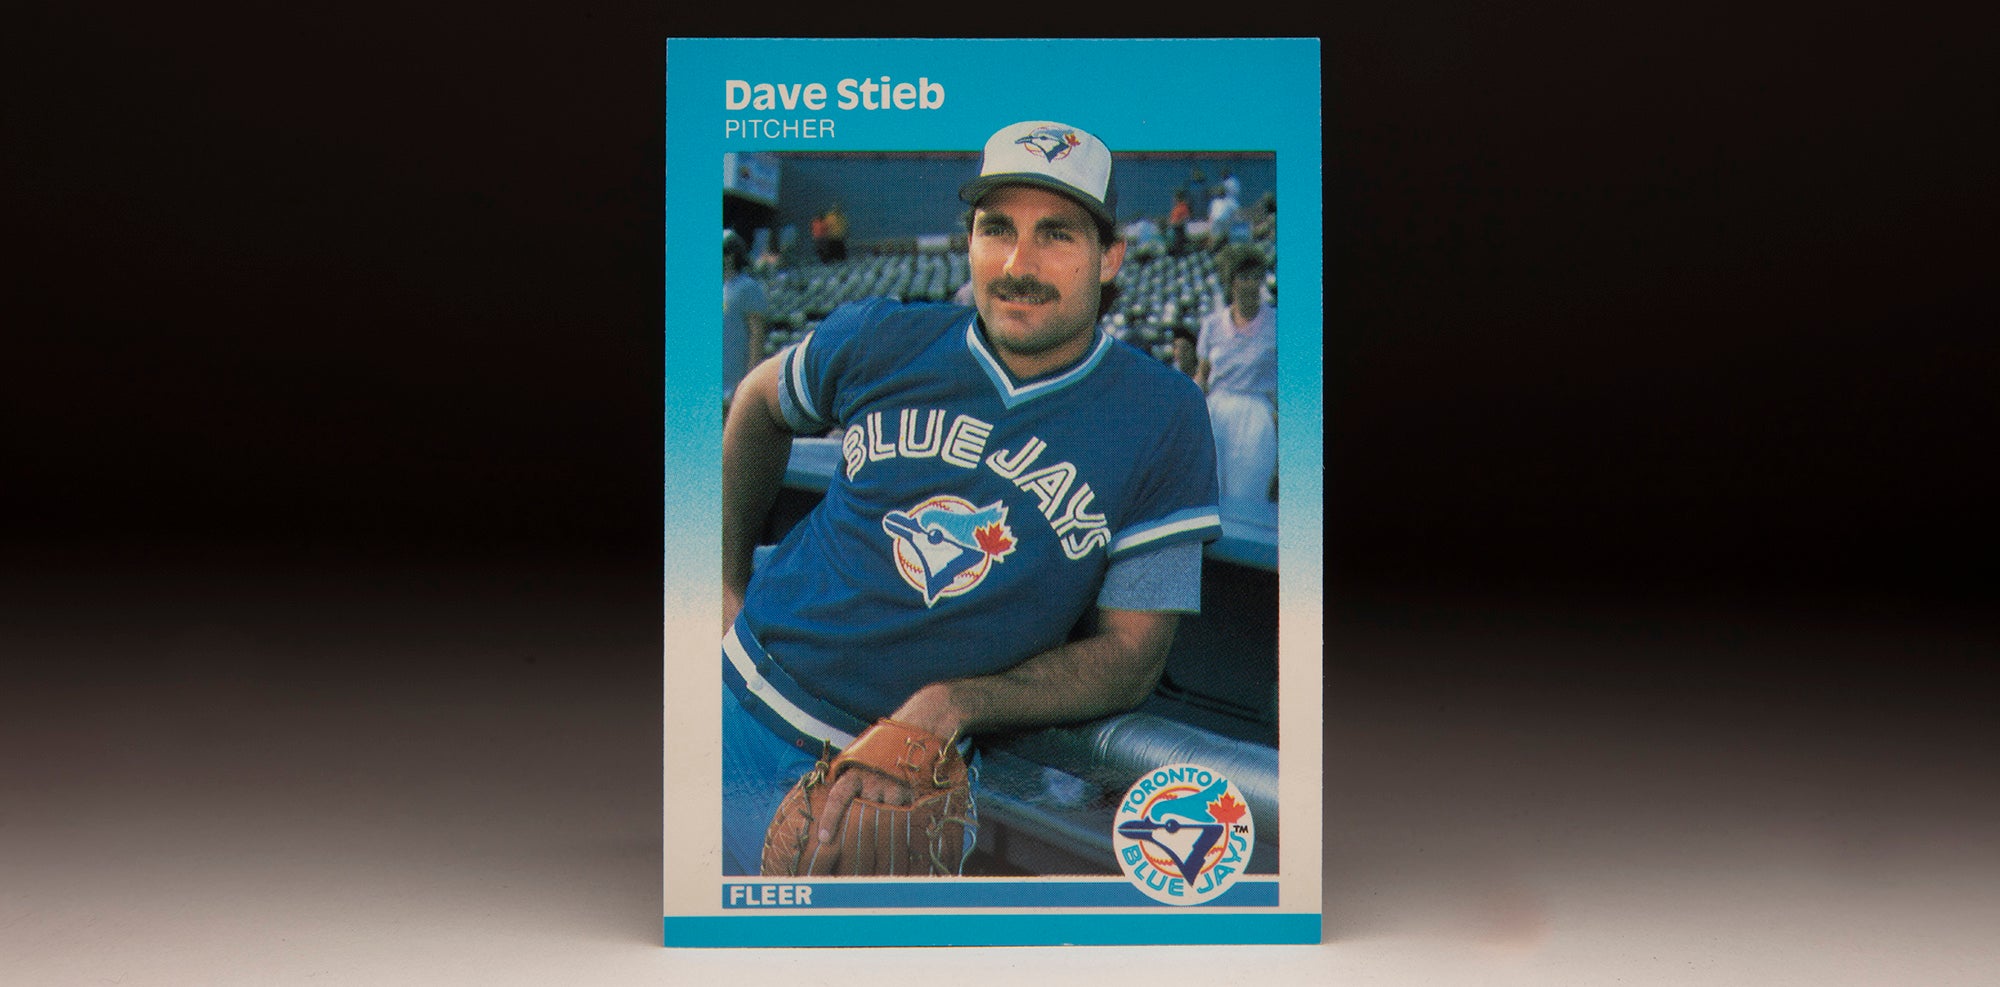 #CardCorner: 1987 Fleer Dave Stieb